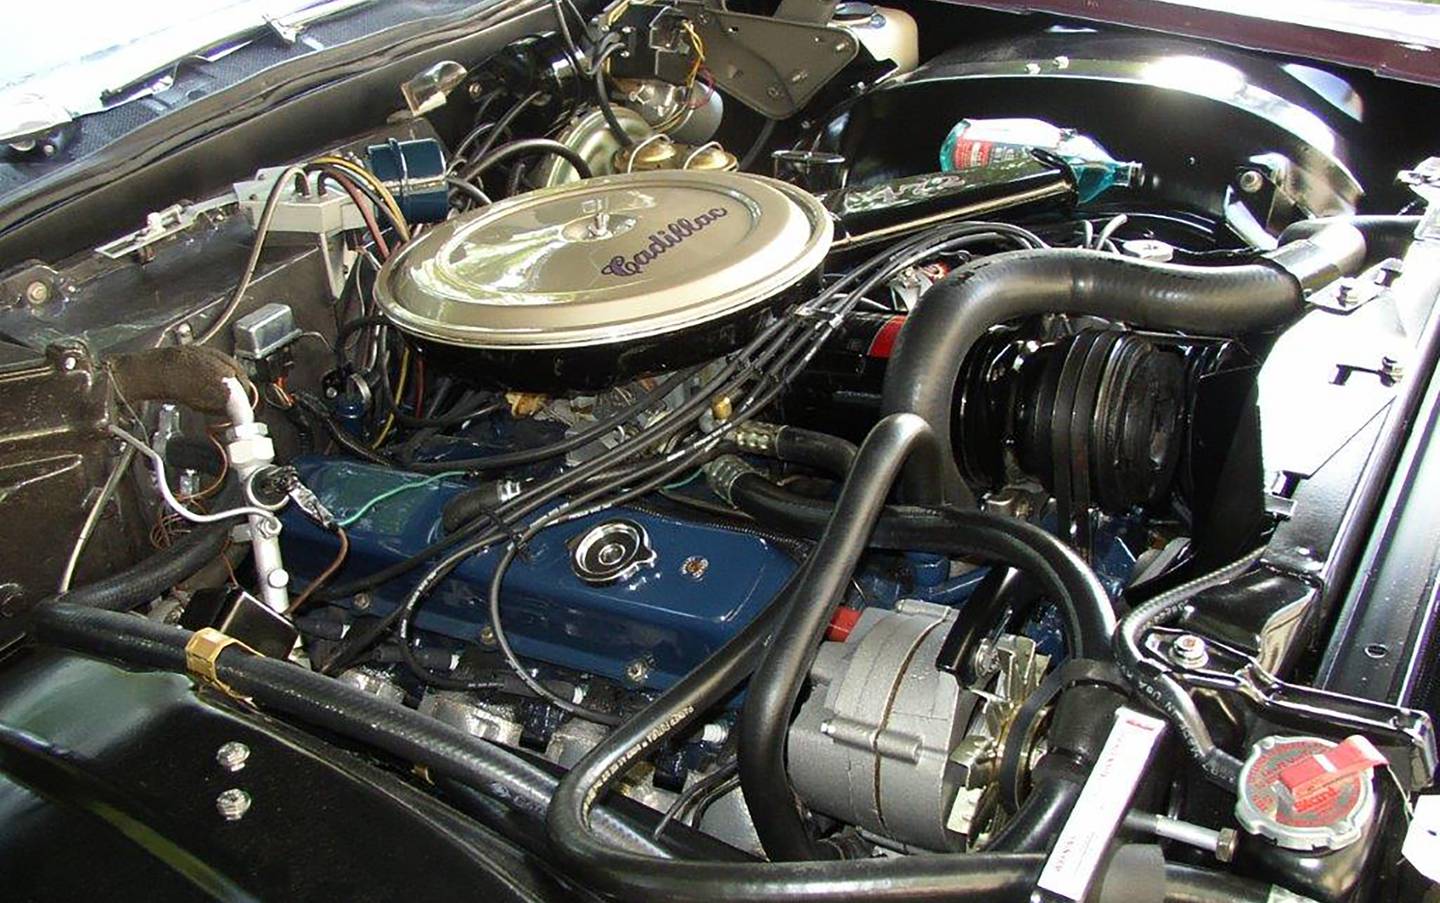 Photos by Steve Rubens - 1969 Cadillac Deville Engine